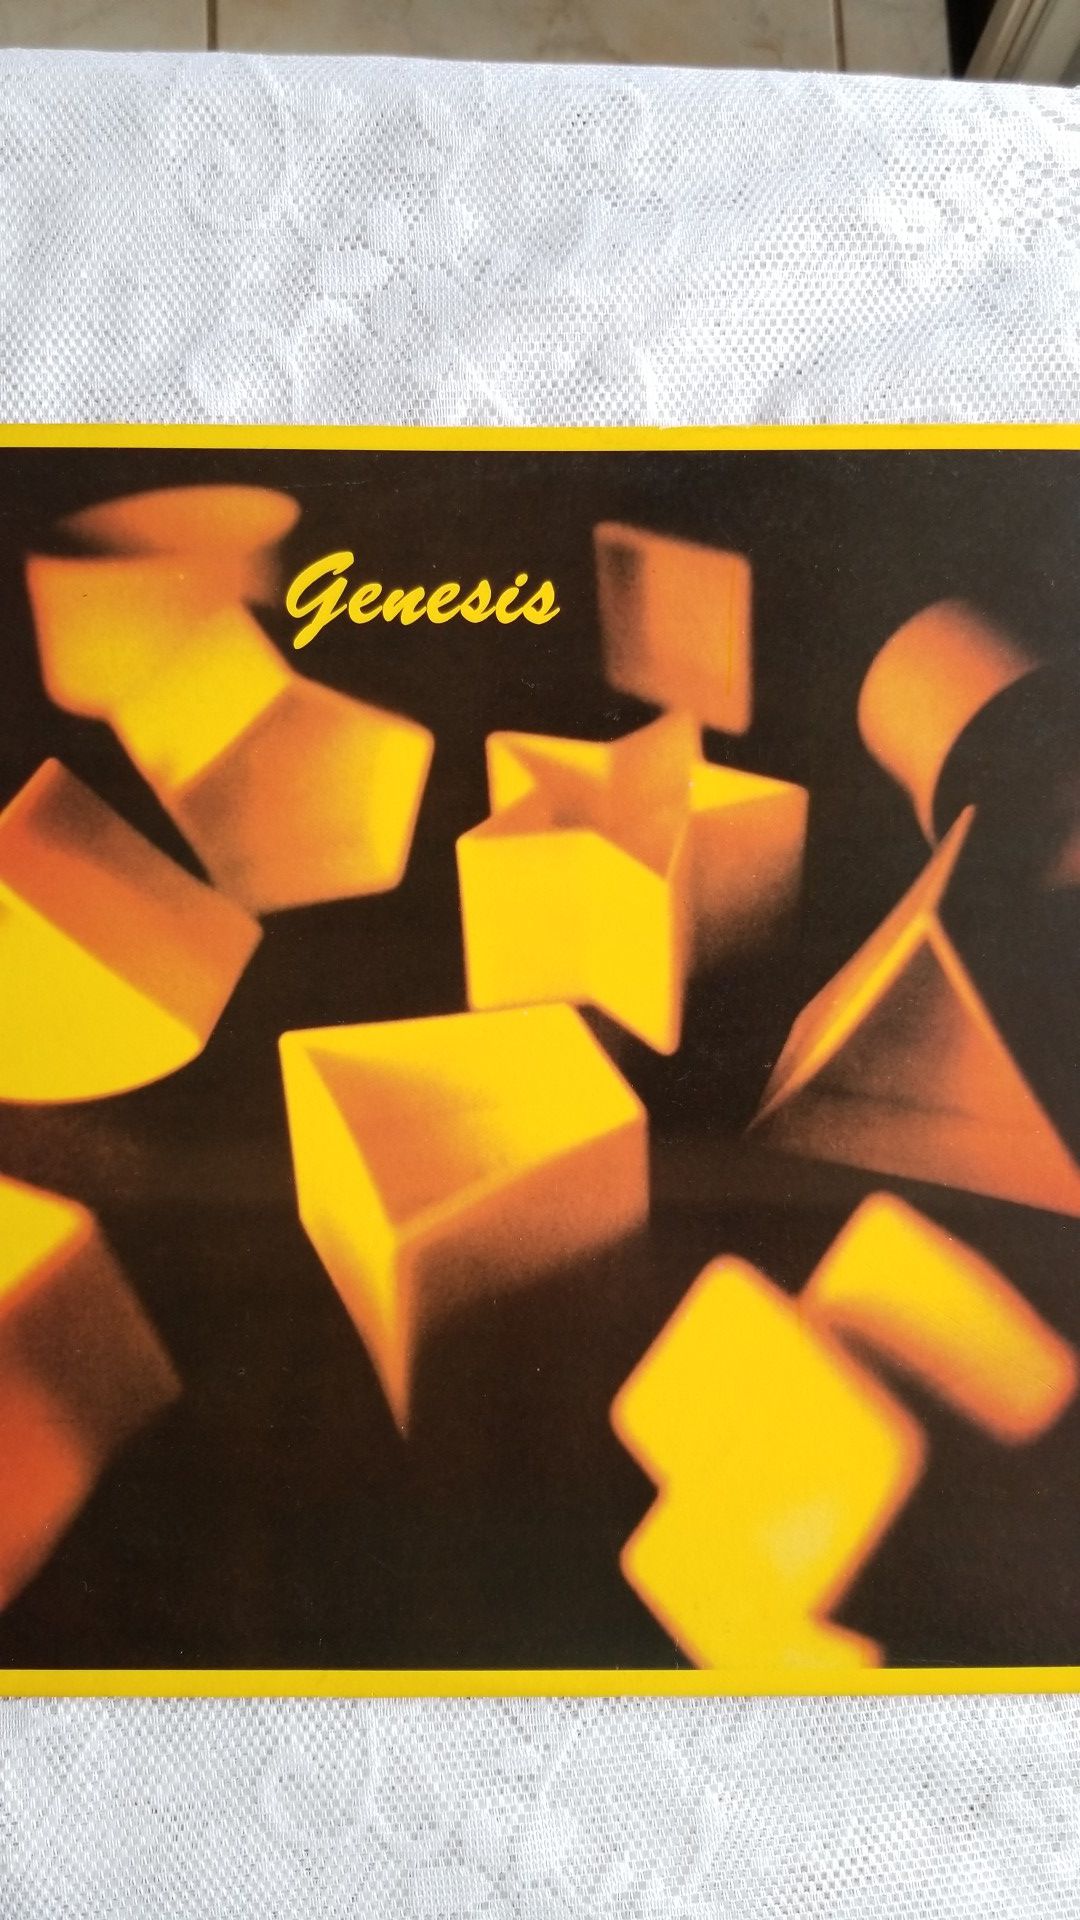 GENESIS VINYL LP RECORD